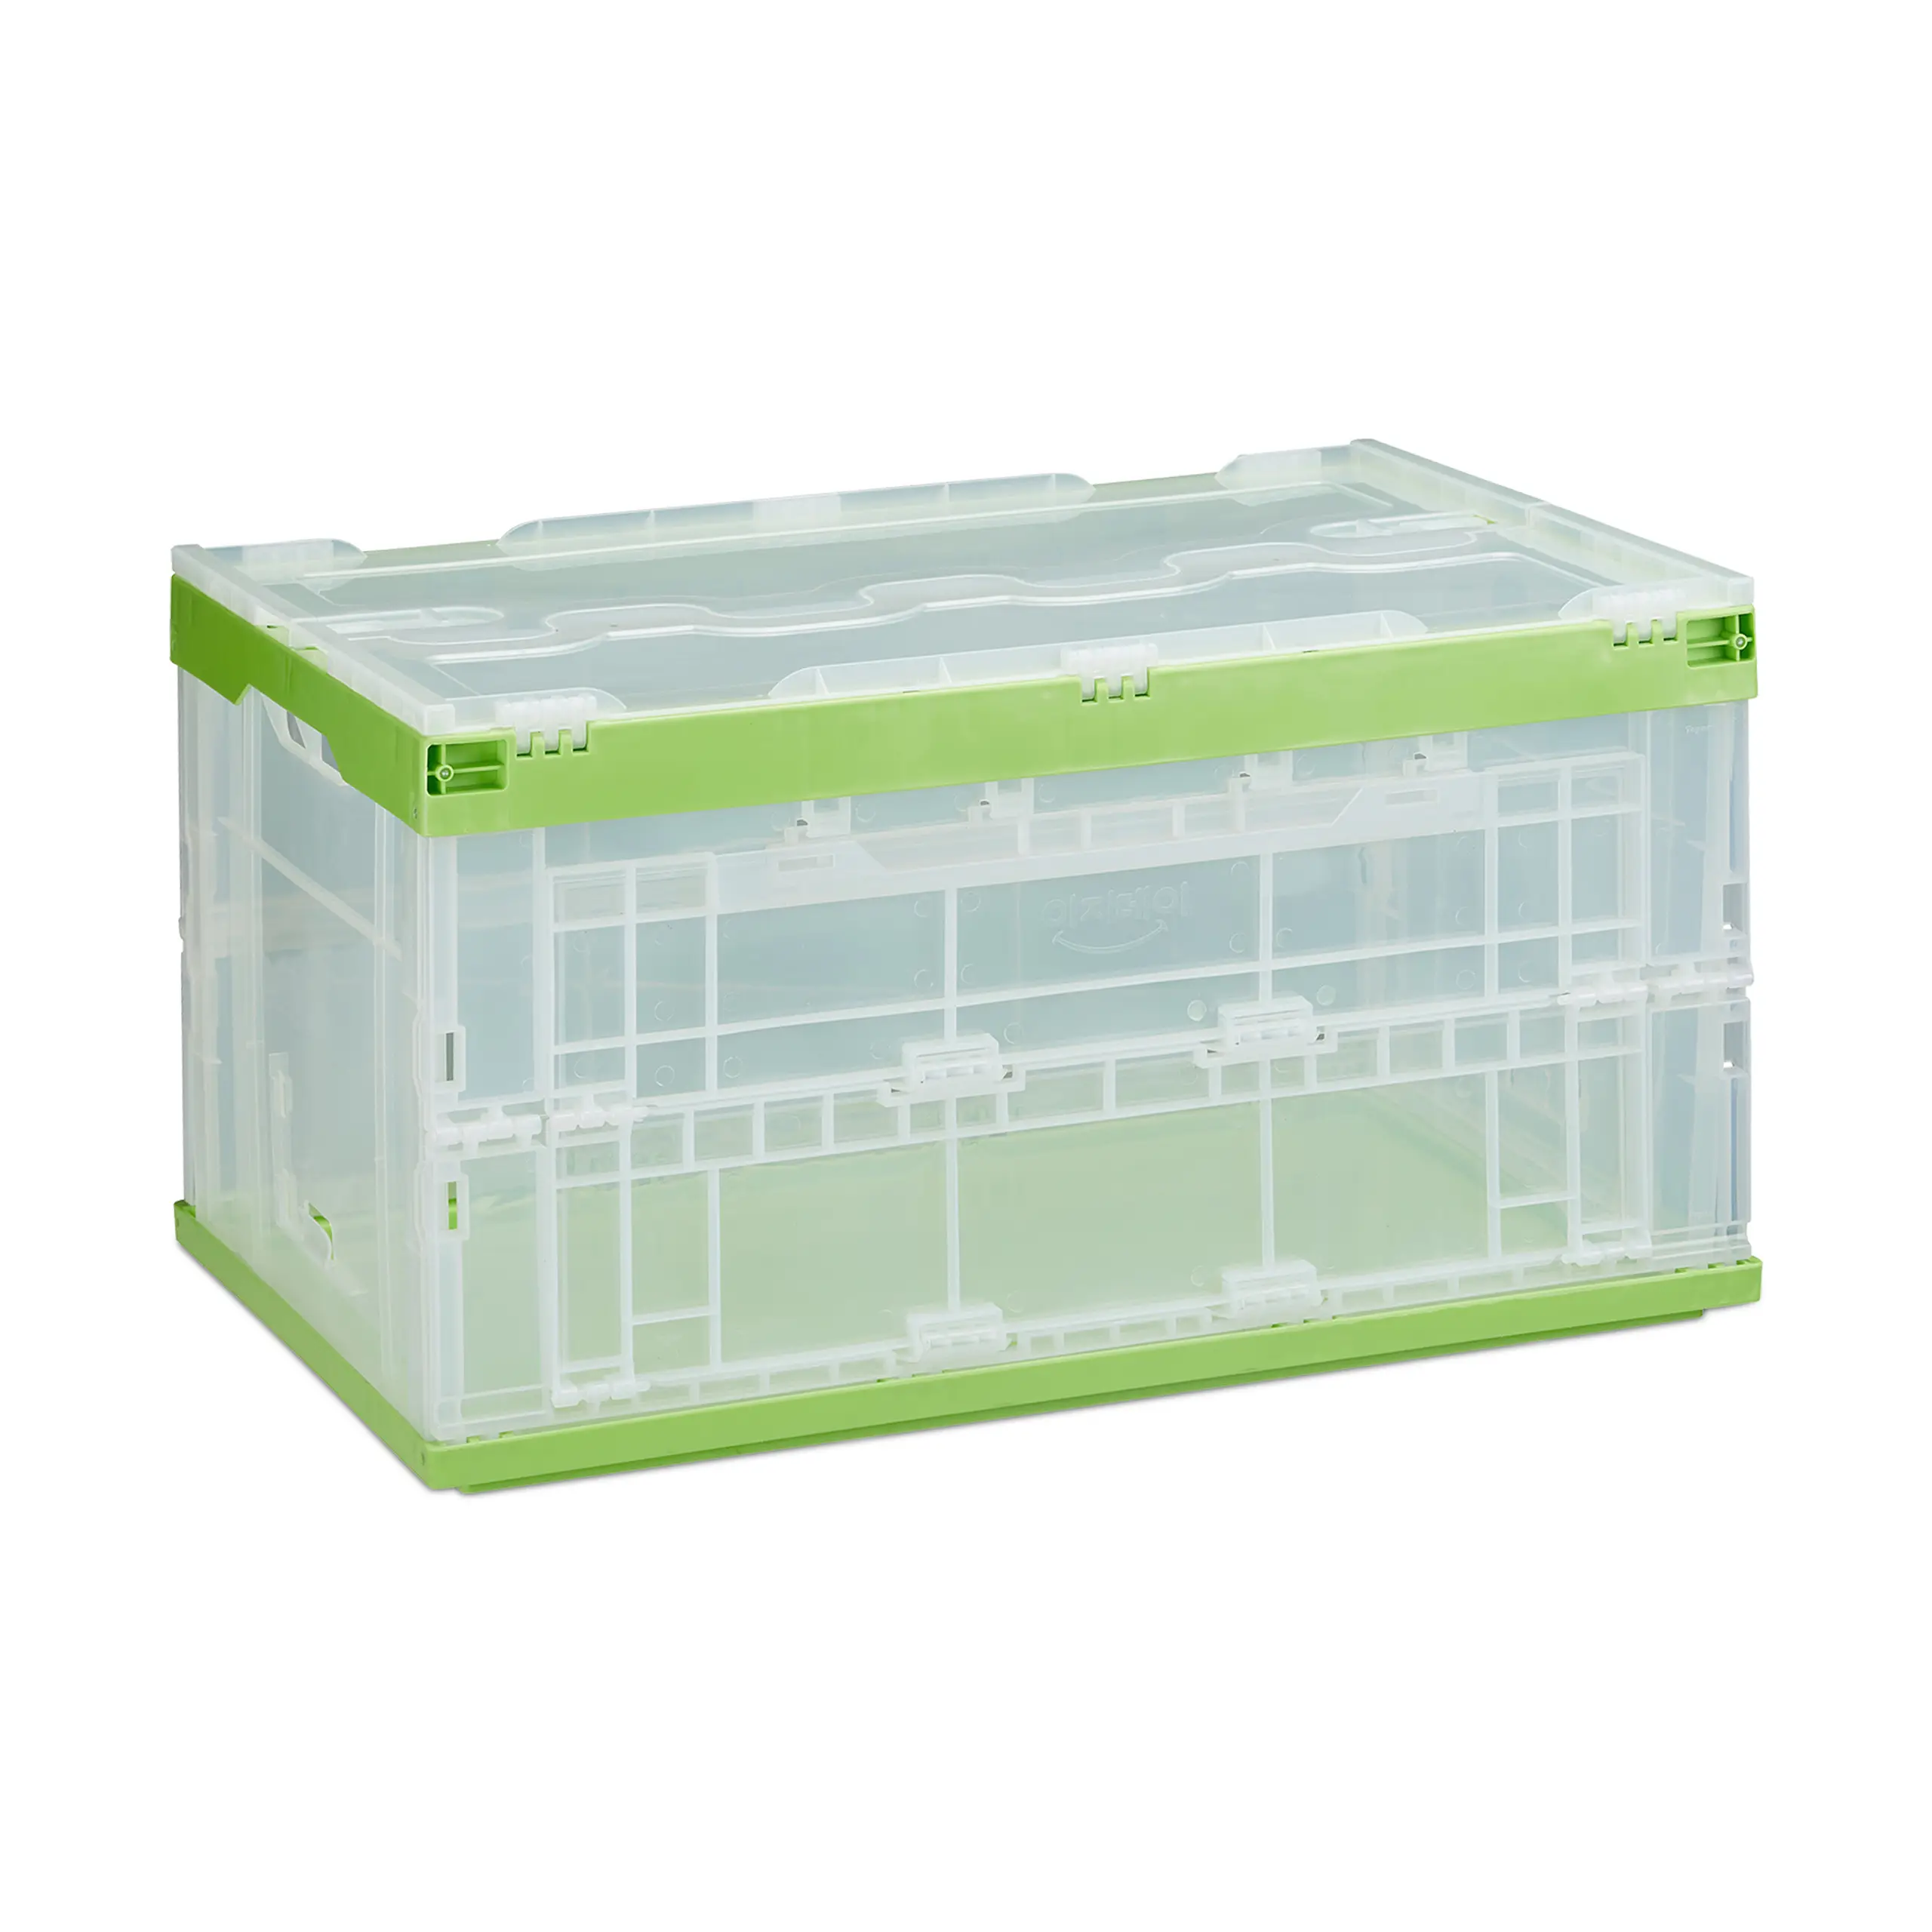 1 x Deckel gr眉n-transparent Transportbox